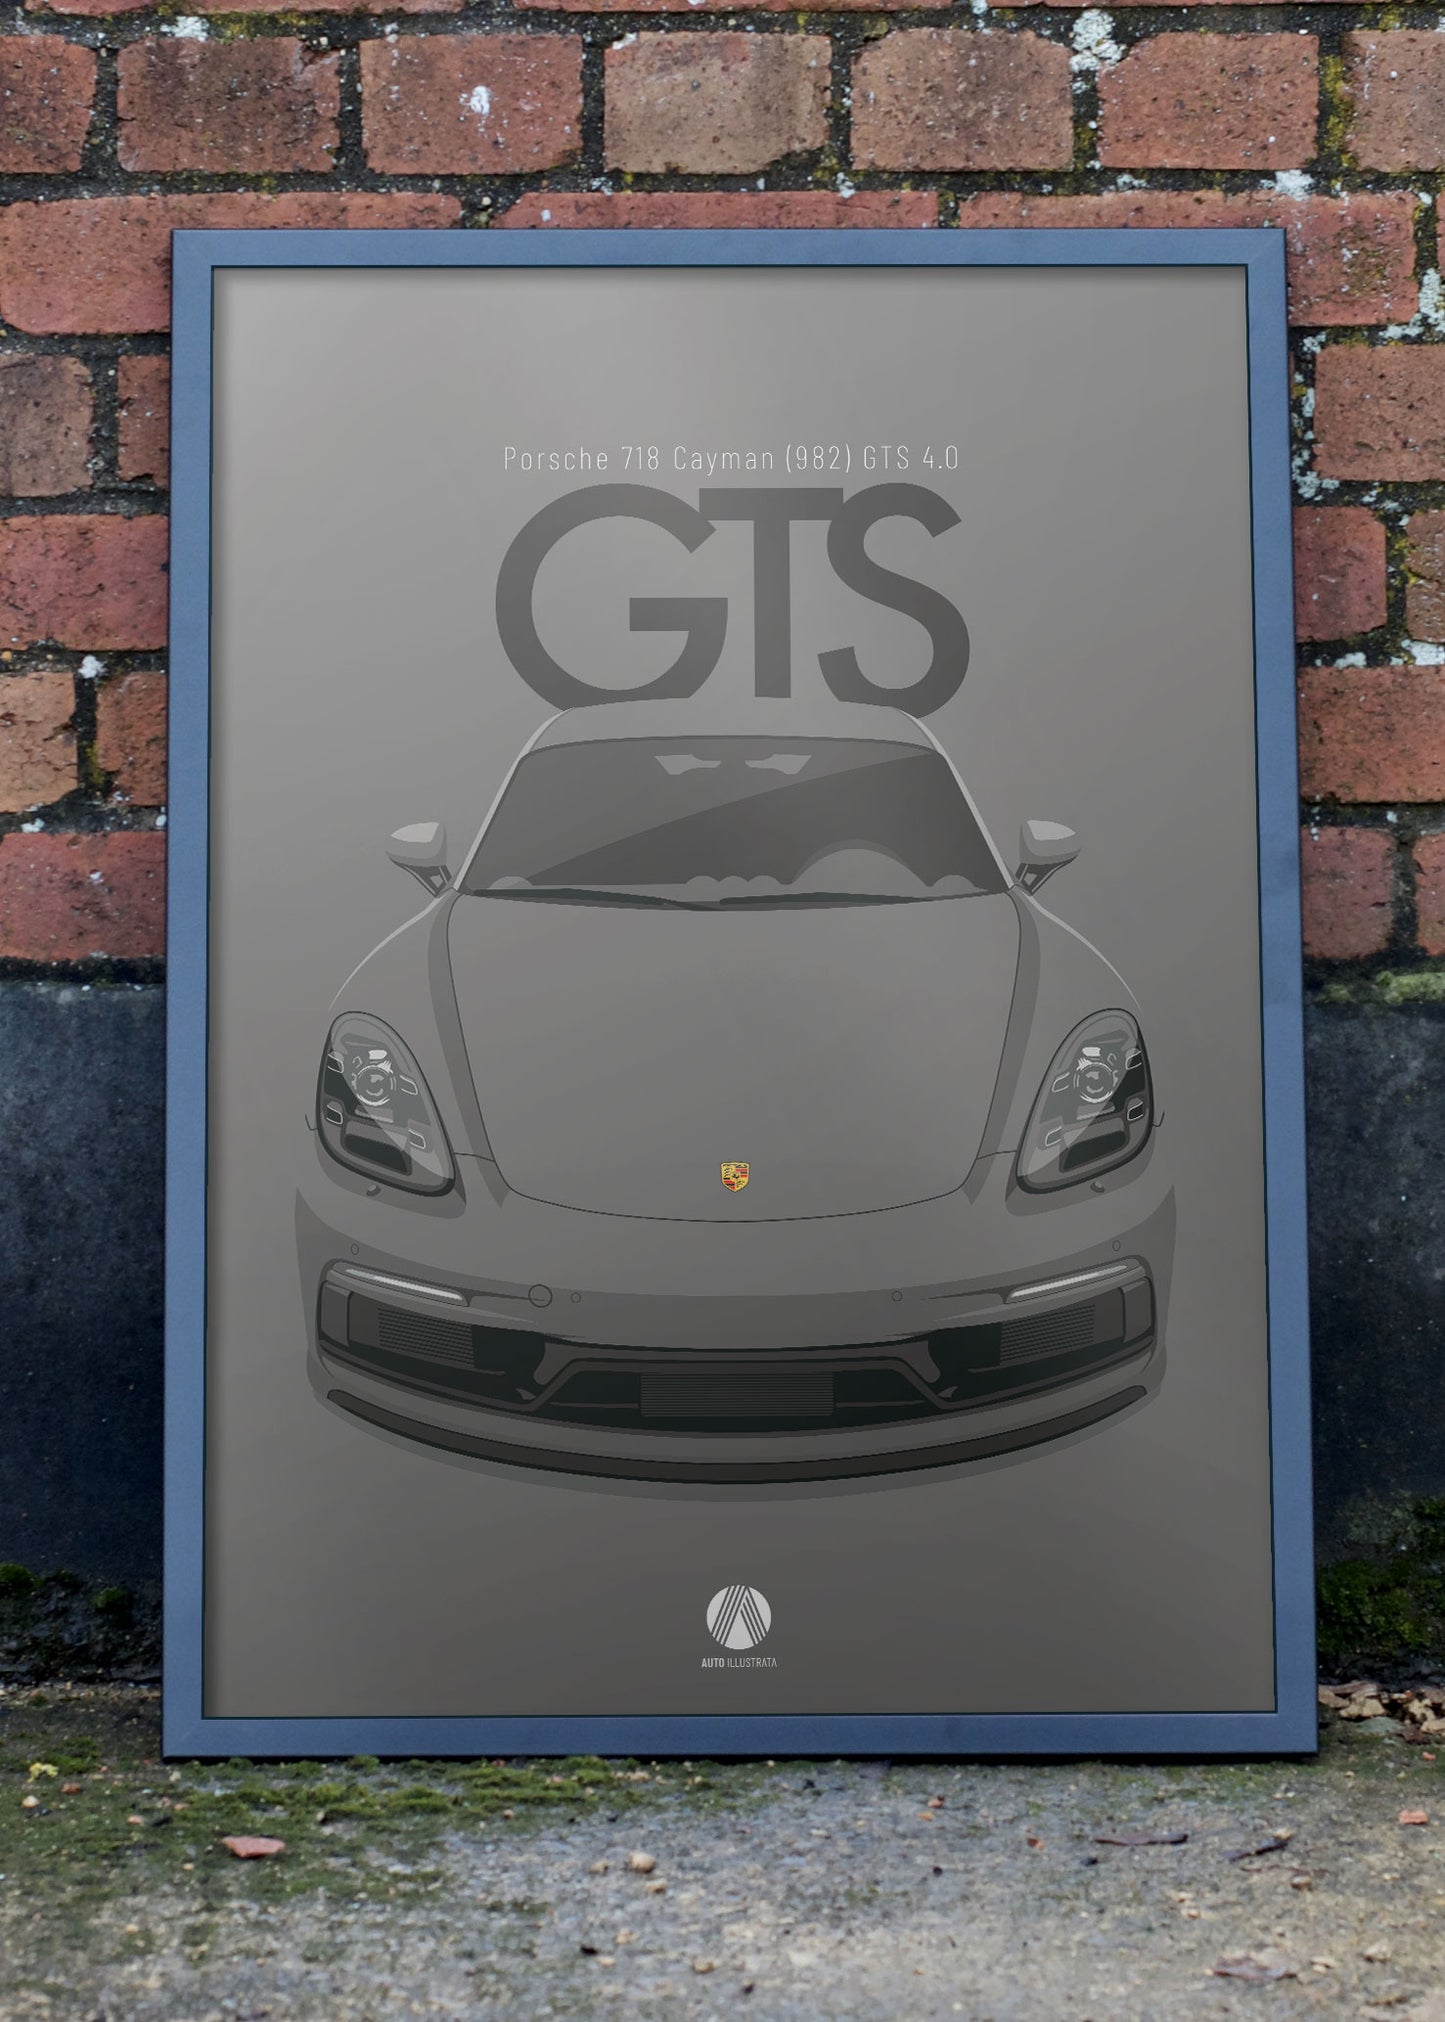 2020 Porsche Cayman (982) GTS 4.0 - Agate Grey - poster print